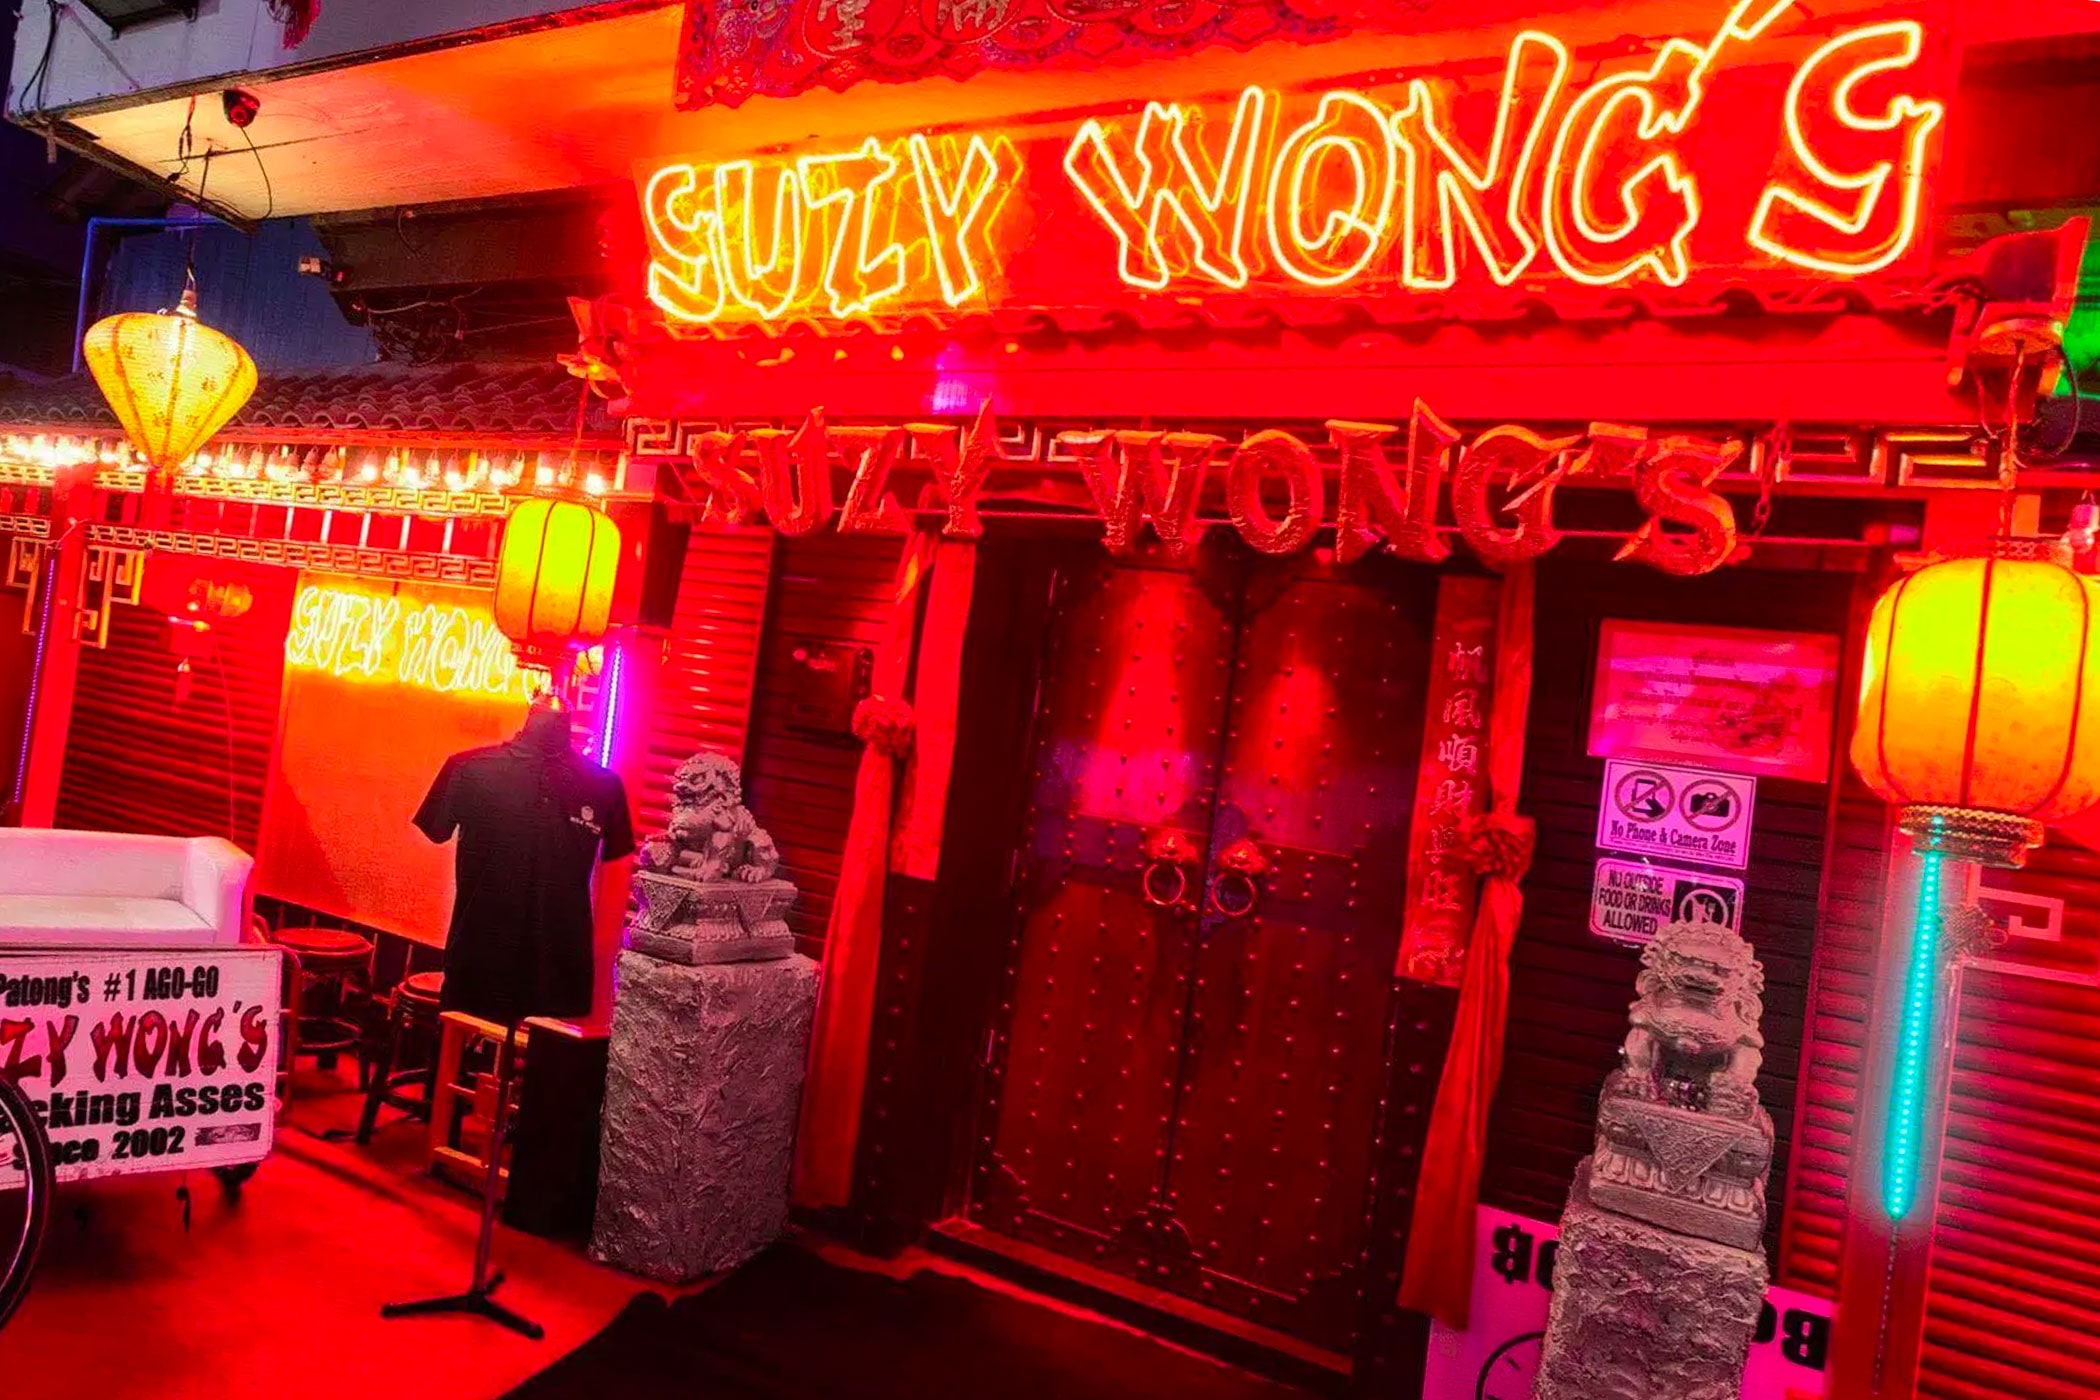 Suzy Wong - Best Go Go Bars in Phuket